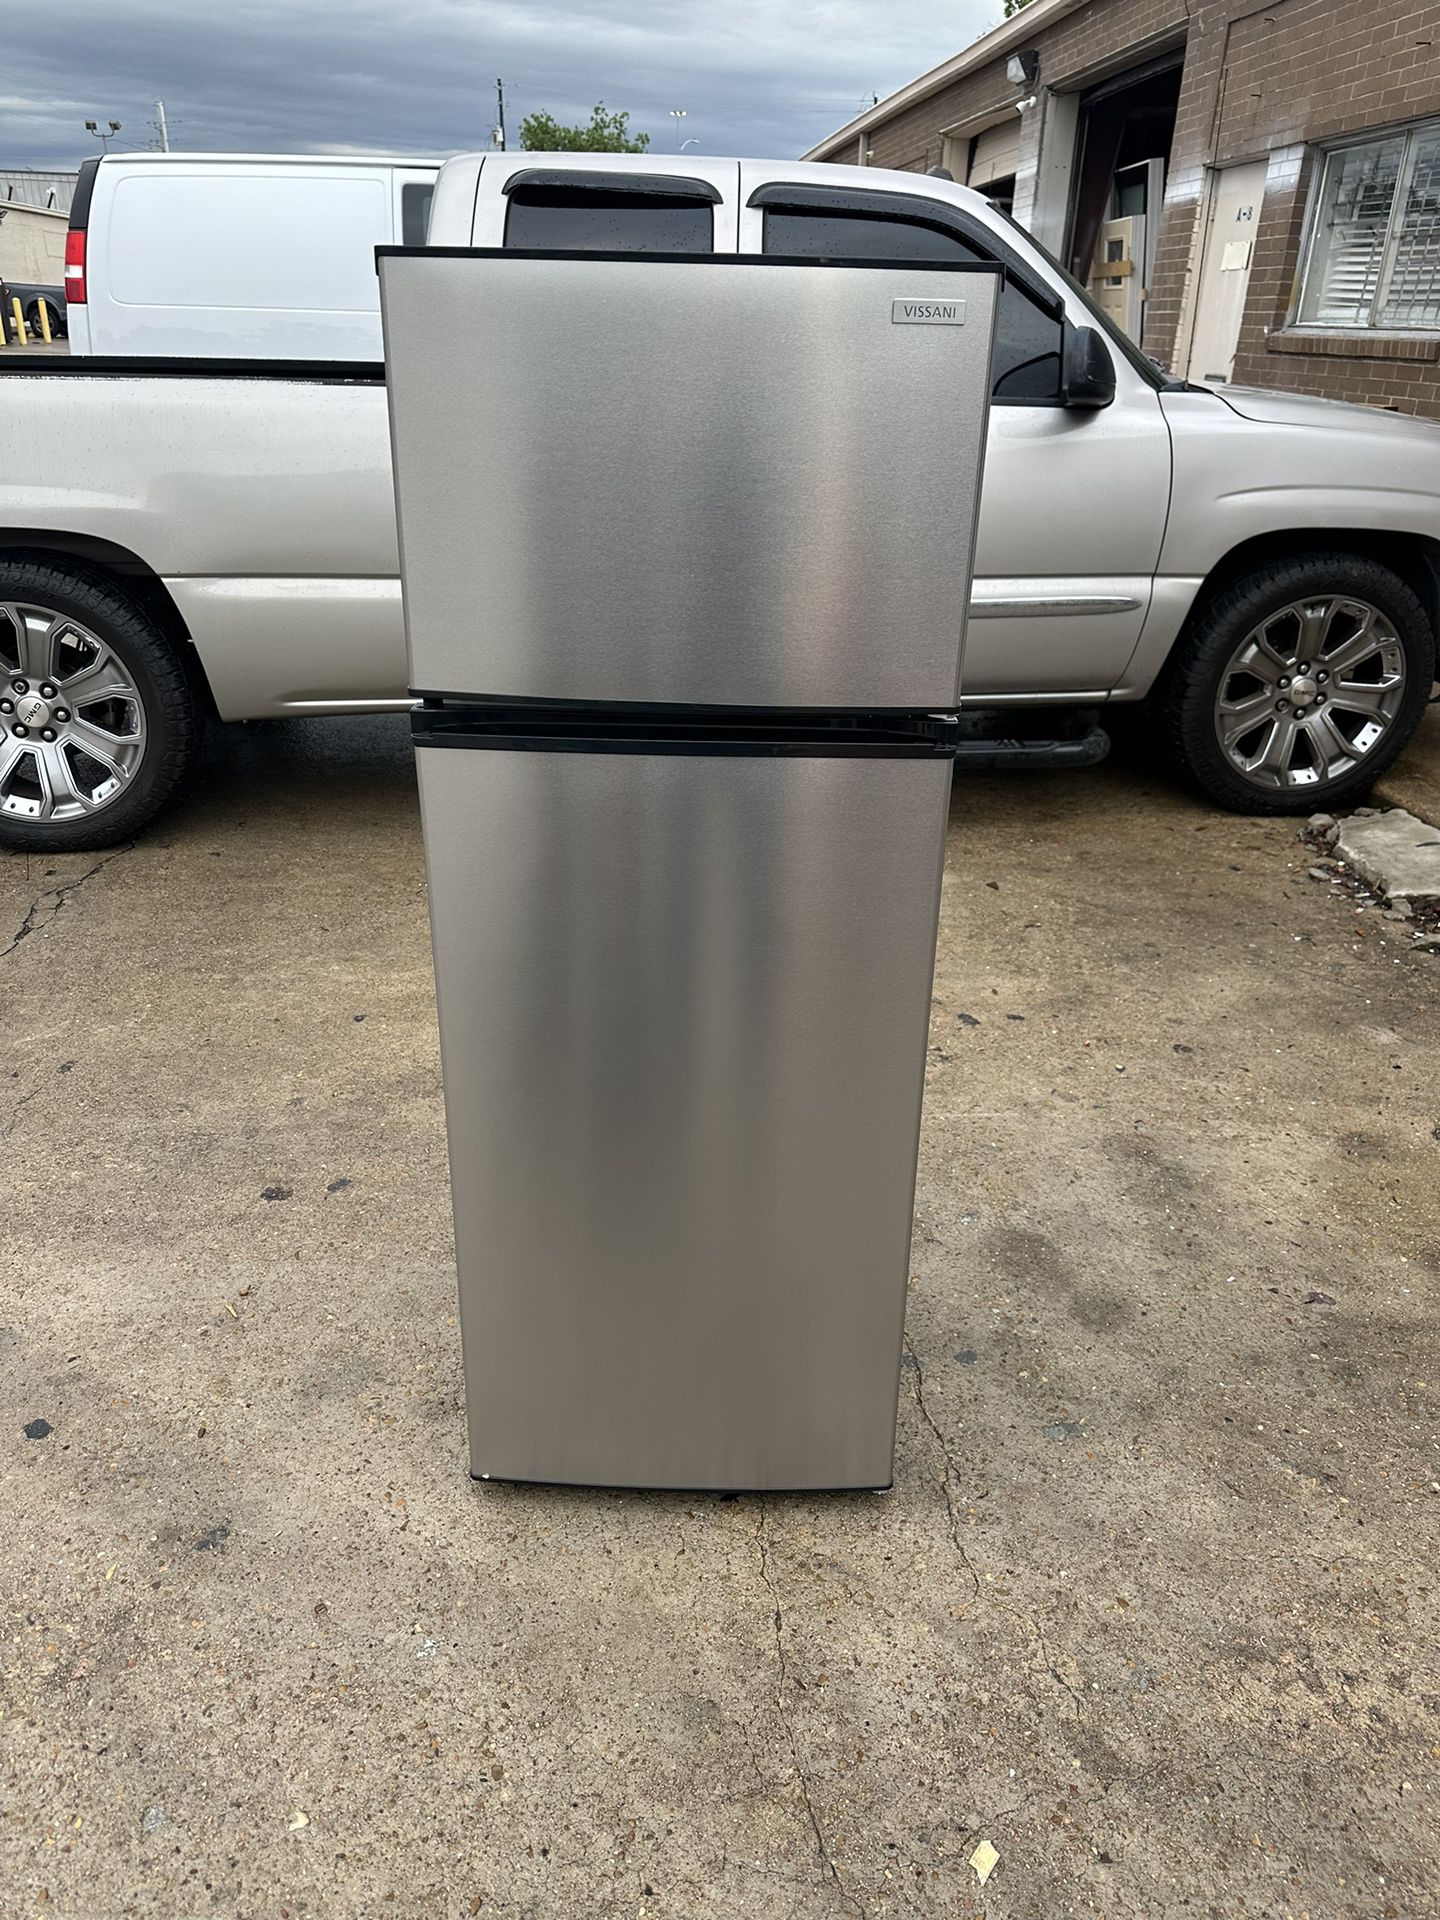 Vissani 7.1 cu. ft. Top Freezer Refrigerator in Stainless Steel Look